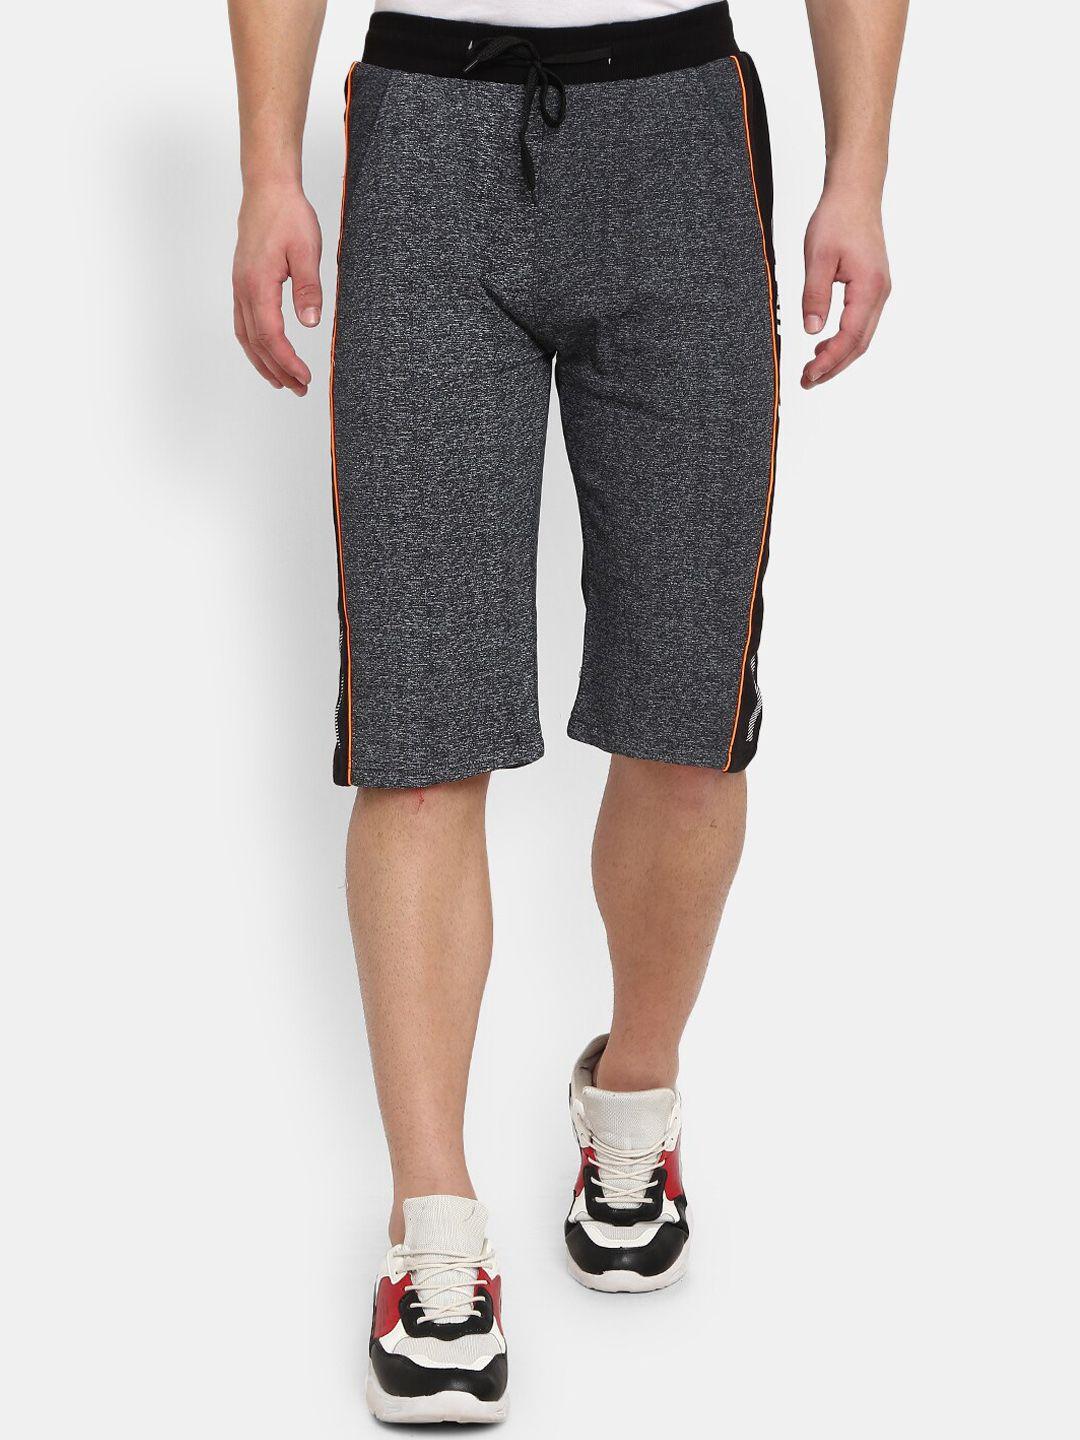 v-mart men grey shorts